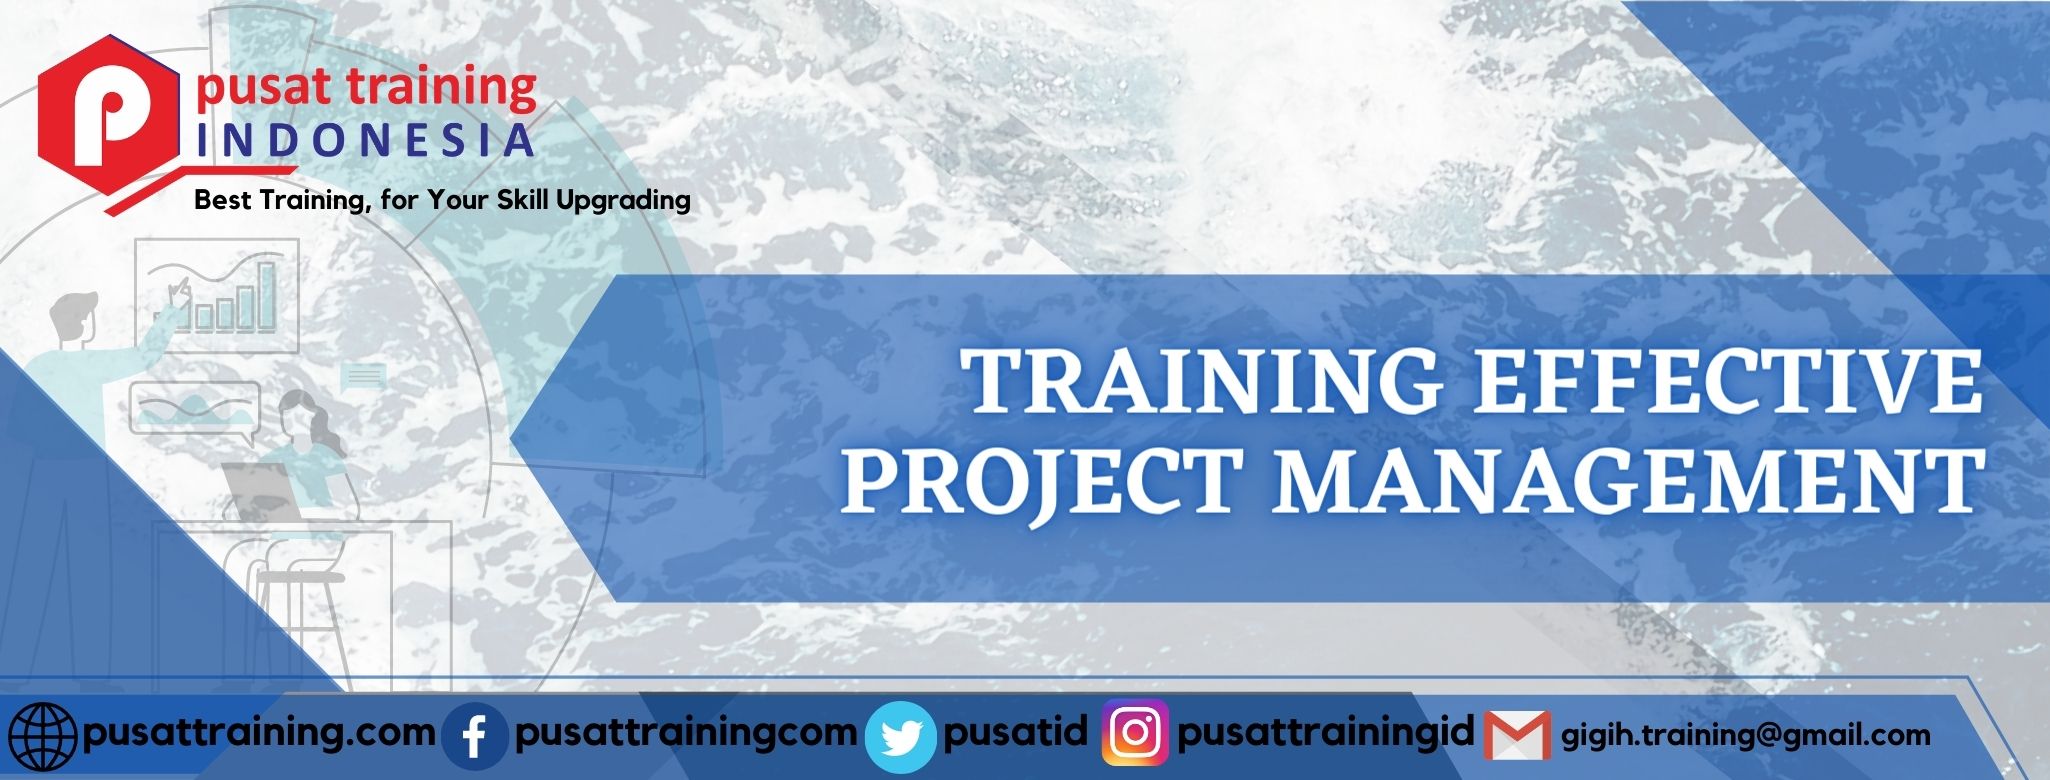 training-effective-project-management